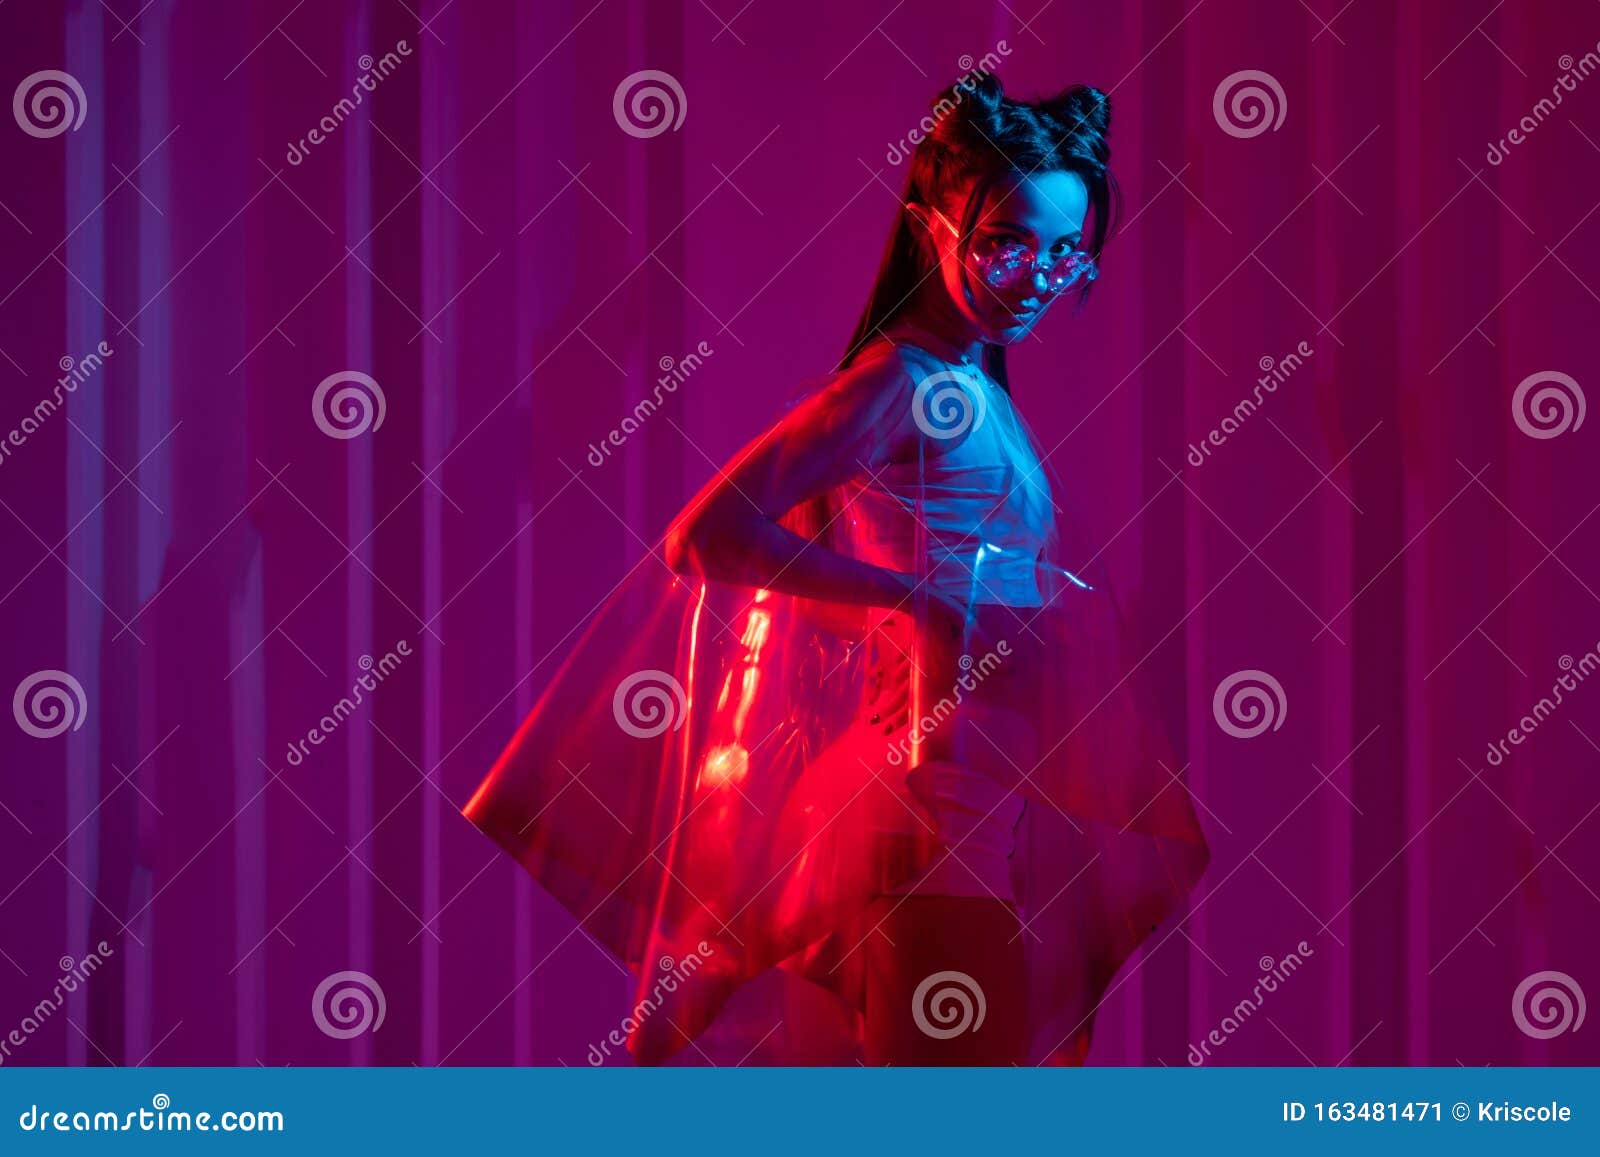 2+ Thousand Cyberpunk Girl Royalty-Free Images, Stock Photos